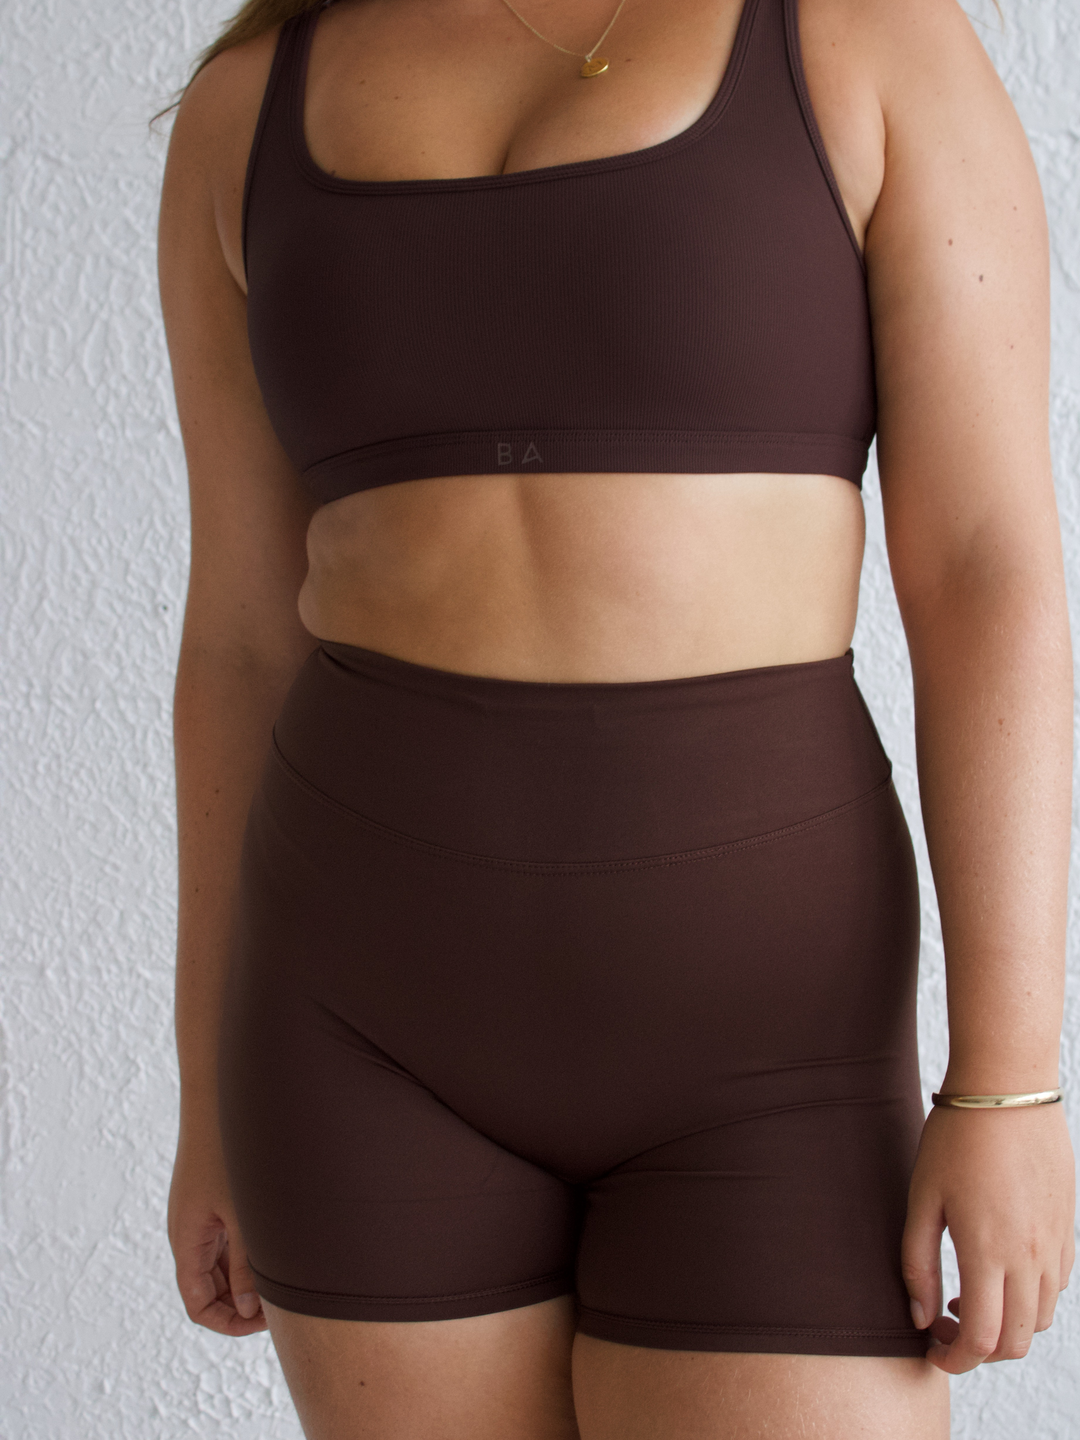 Gaiam Women's Warrior Yoga Short - Bike & Running Activewear Shorts - 3  Inch Inseam - Odyssey Gray Mesh, X-Large